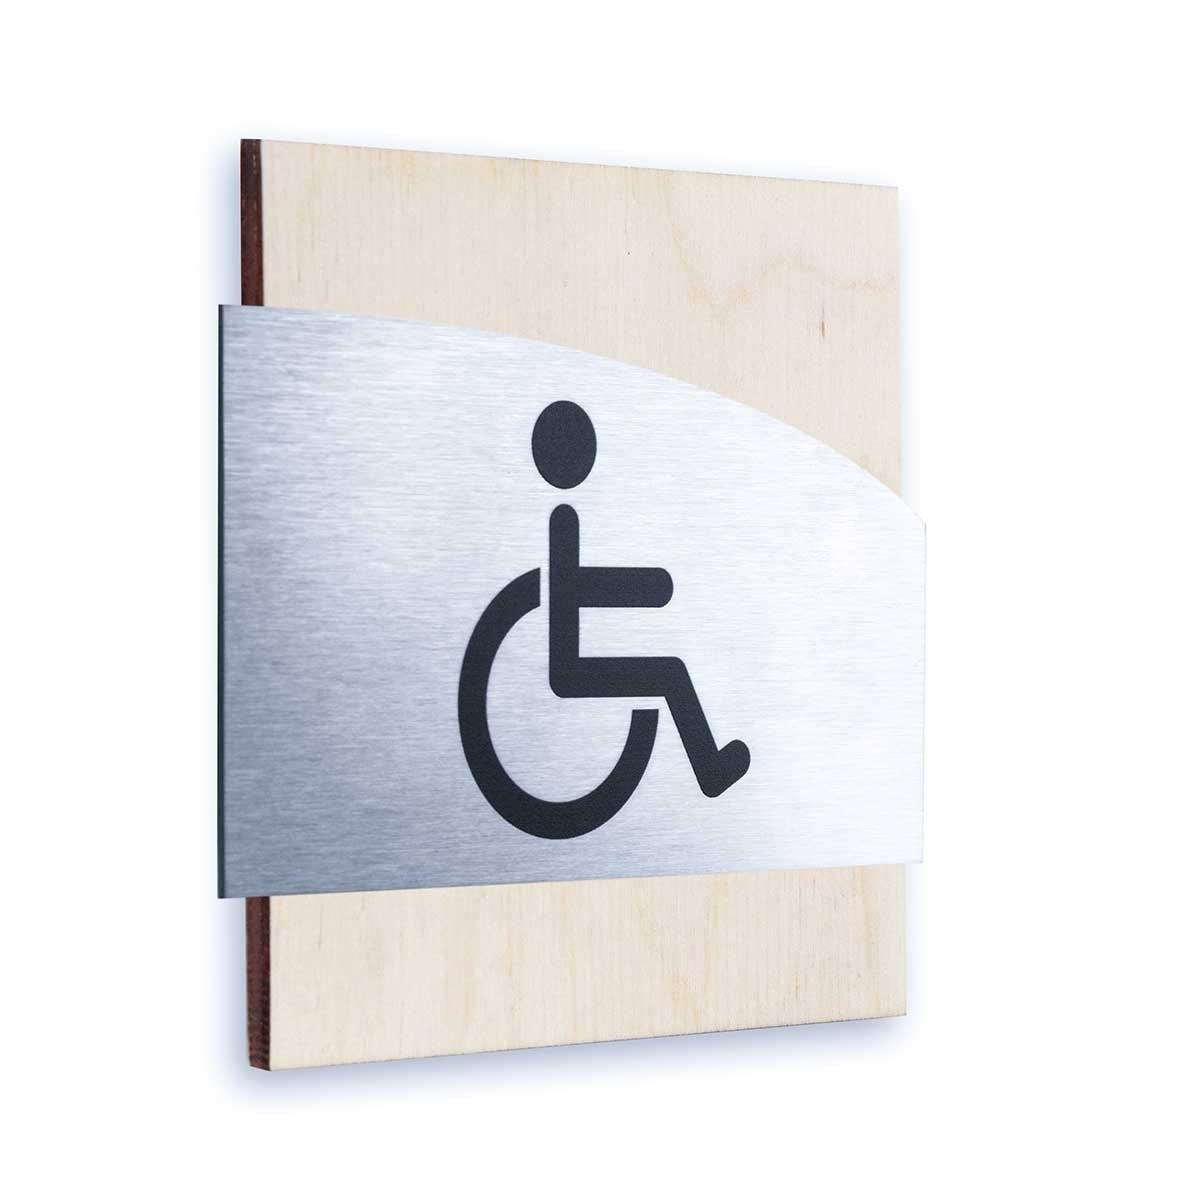 Steel Wheelchairs Wign for Restroom Doors Bathroom Signs Natural wood Bsign